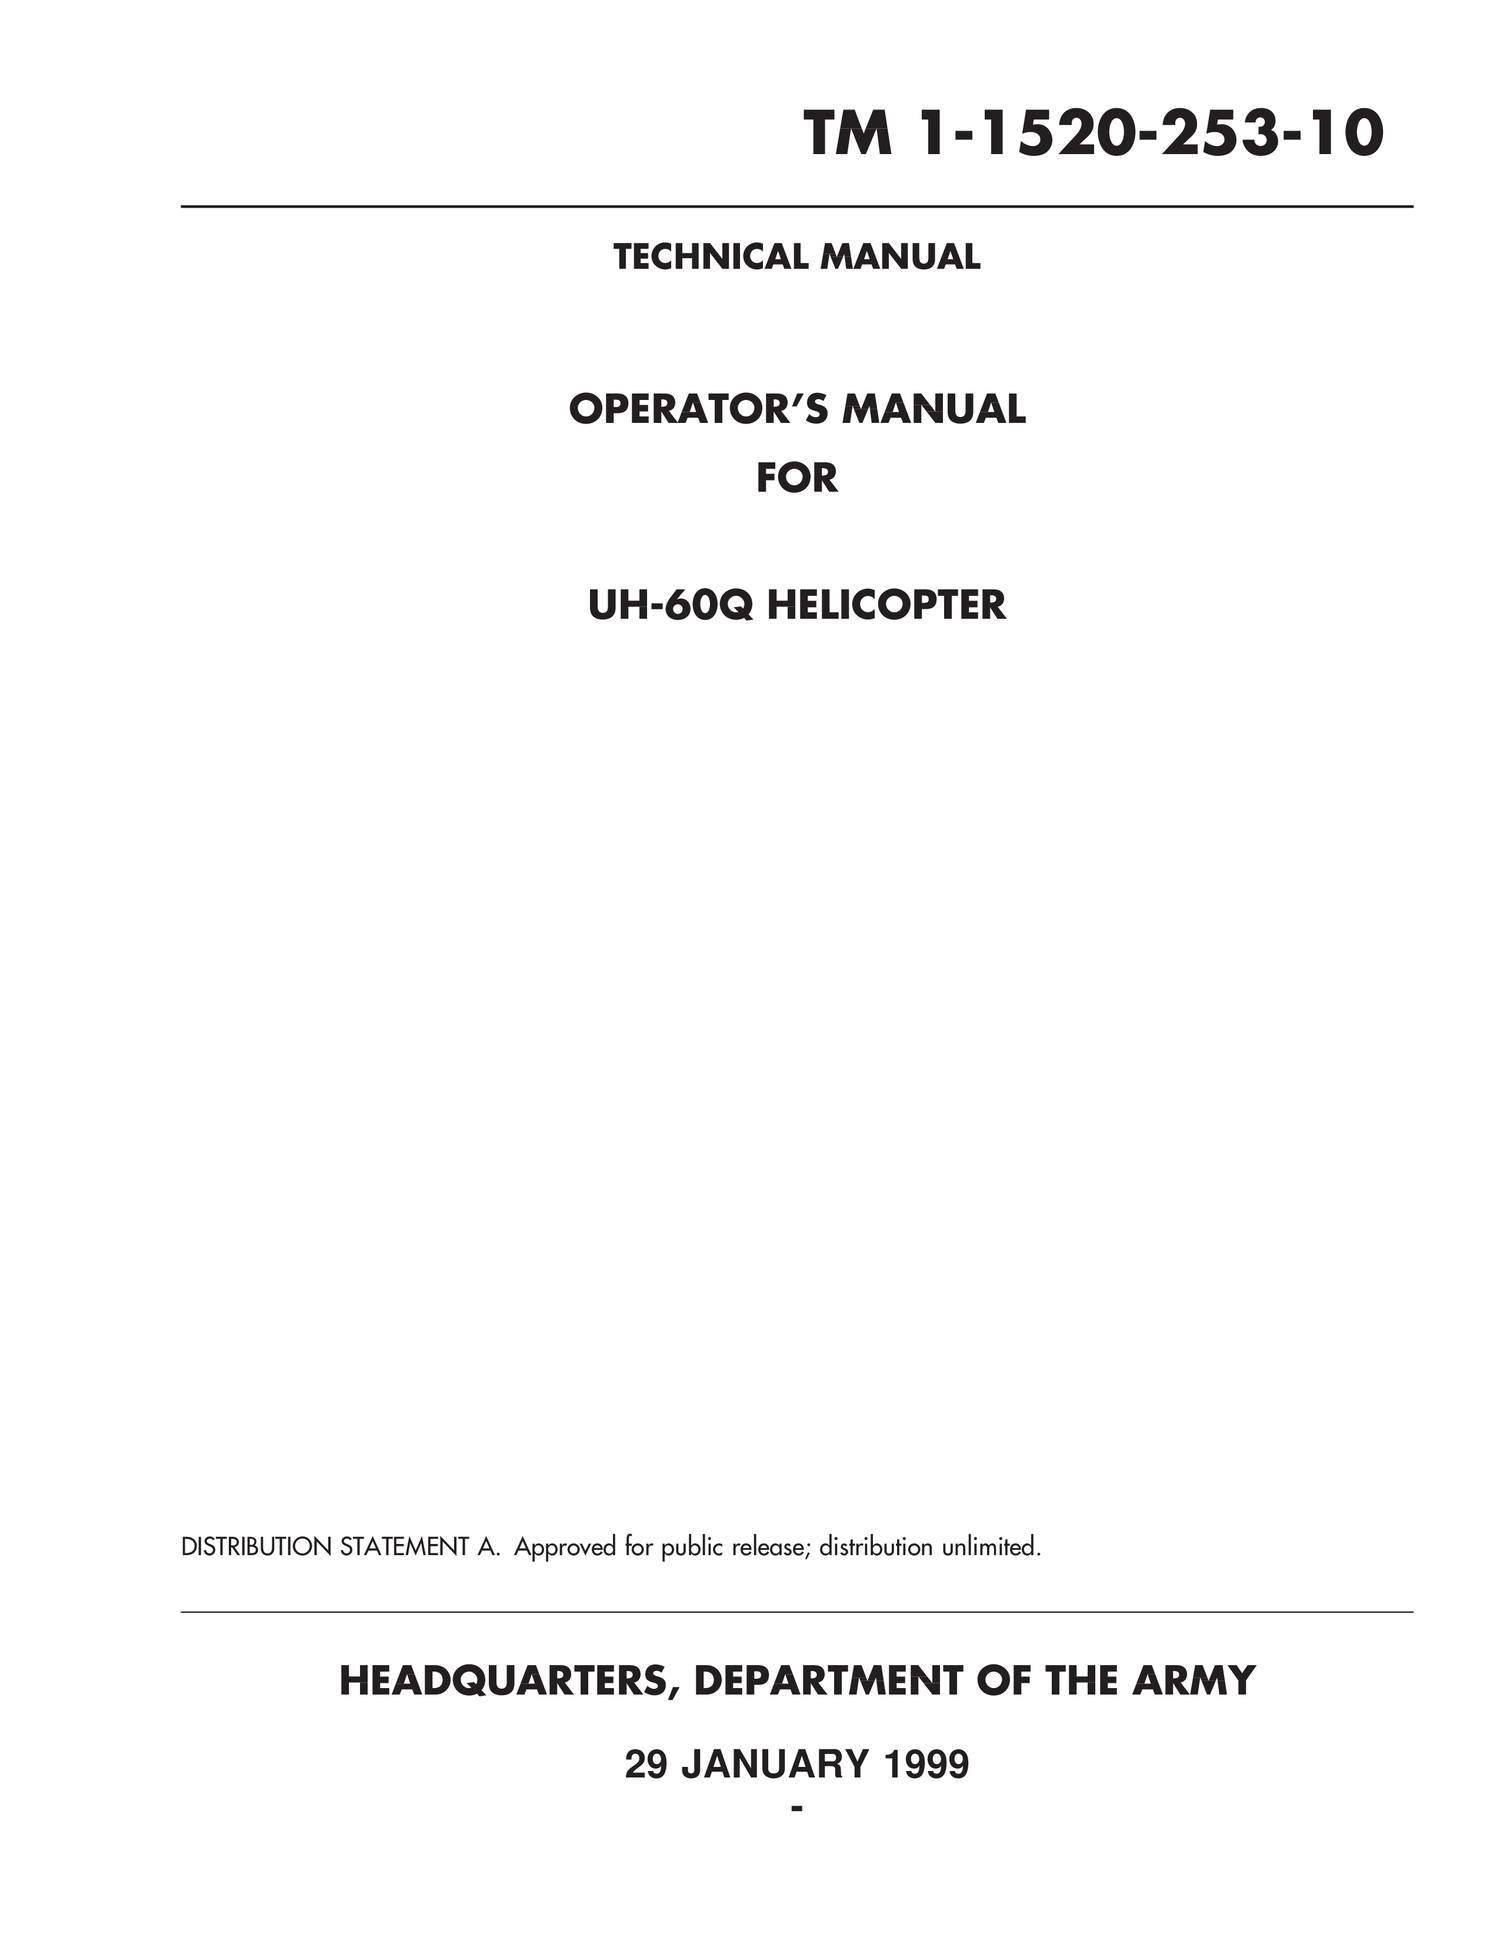 Sikorsky UH-60 Black Hawk Operators Manual.pdf | DocDroid